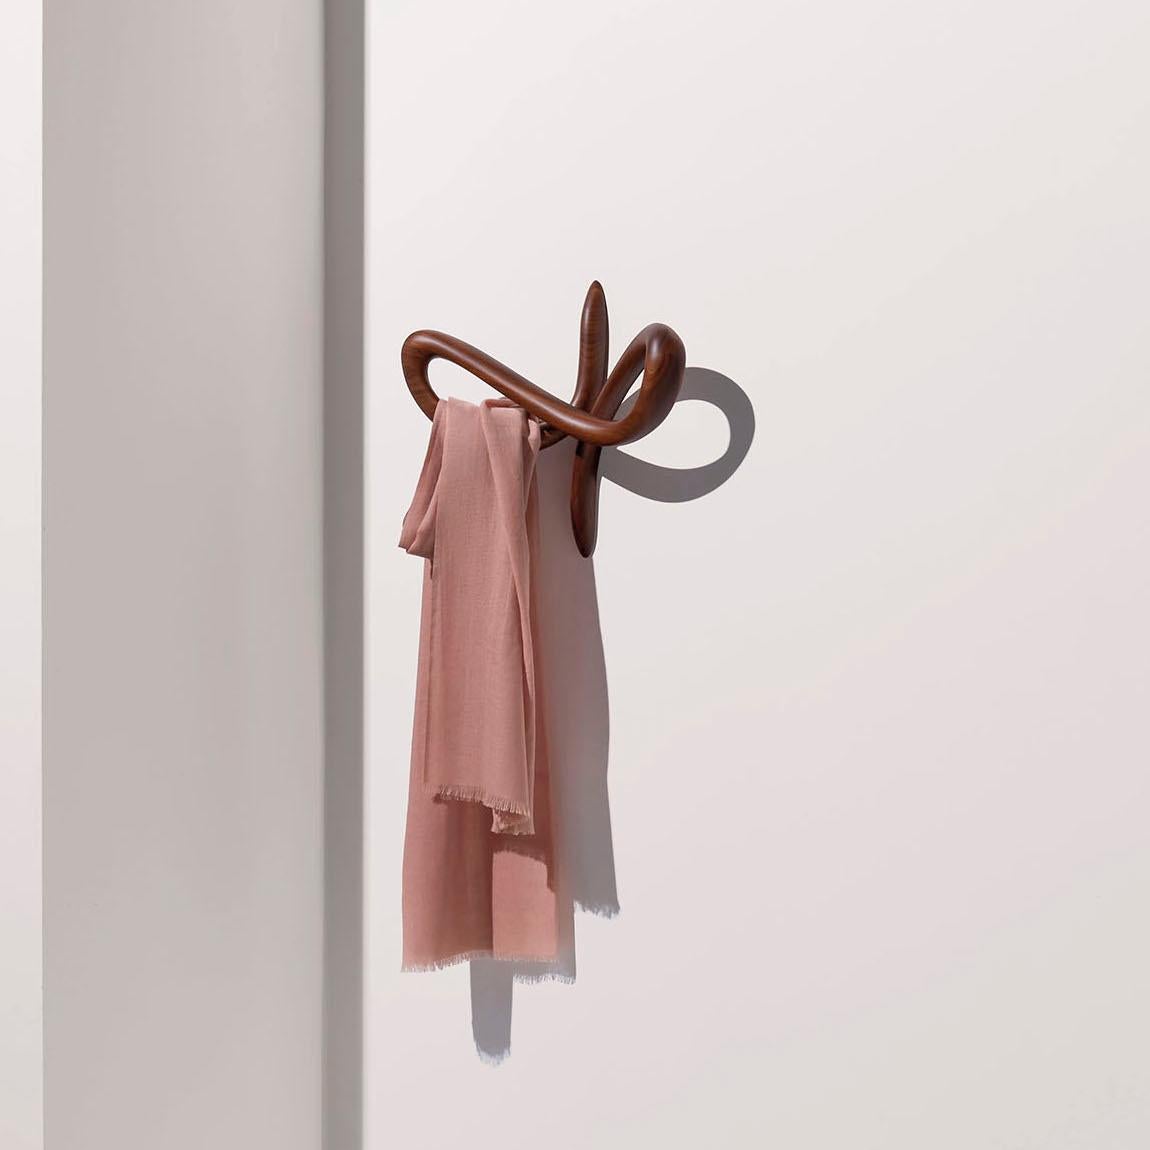 Nomon Vertigo Coat Hanger by Andres Martinez  For Sale 7